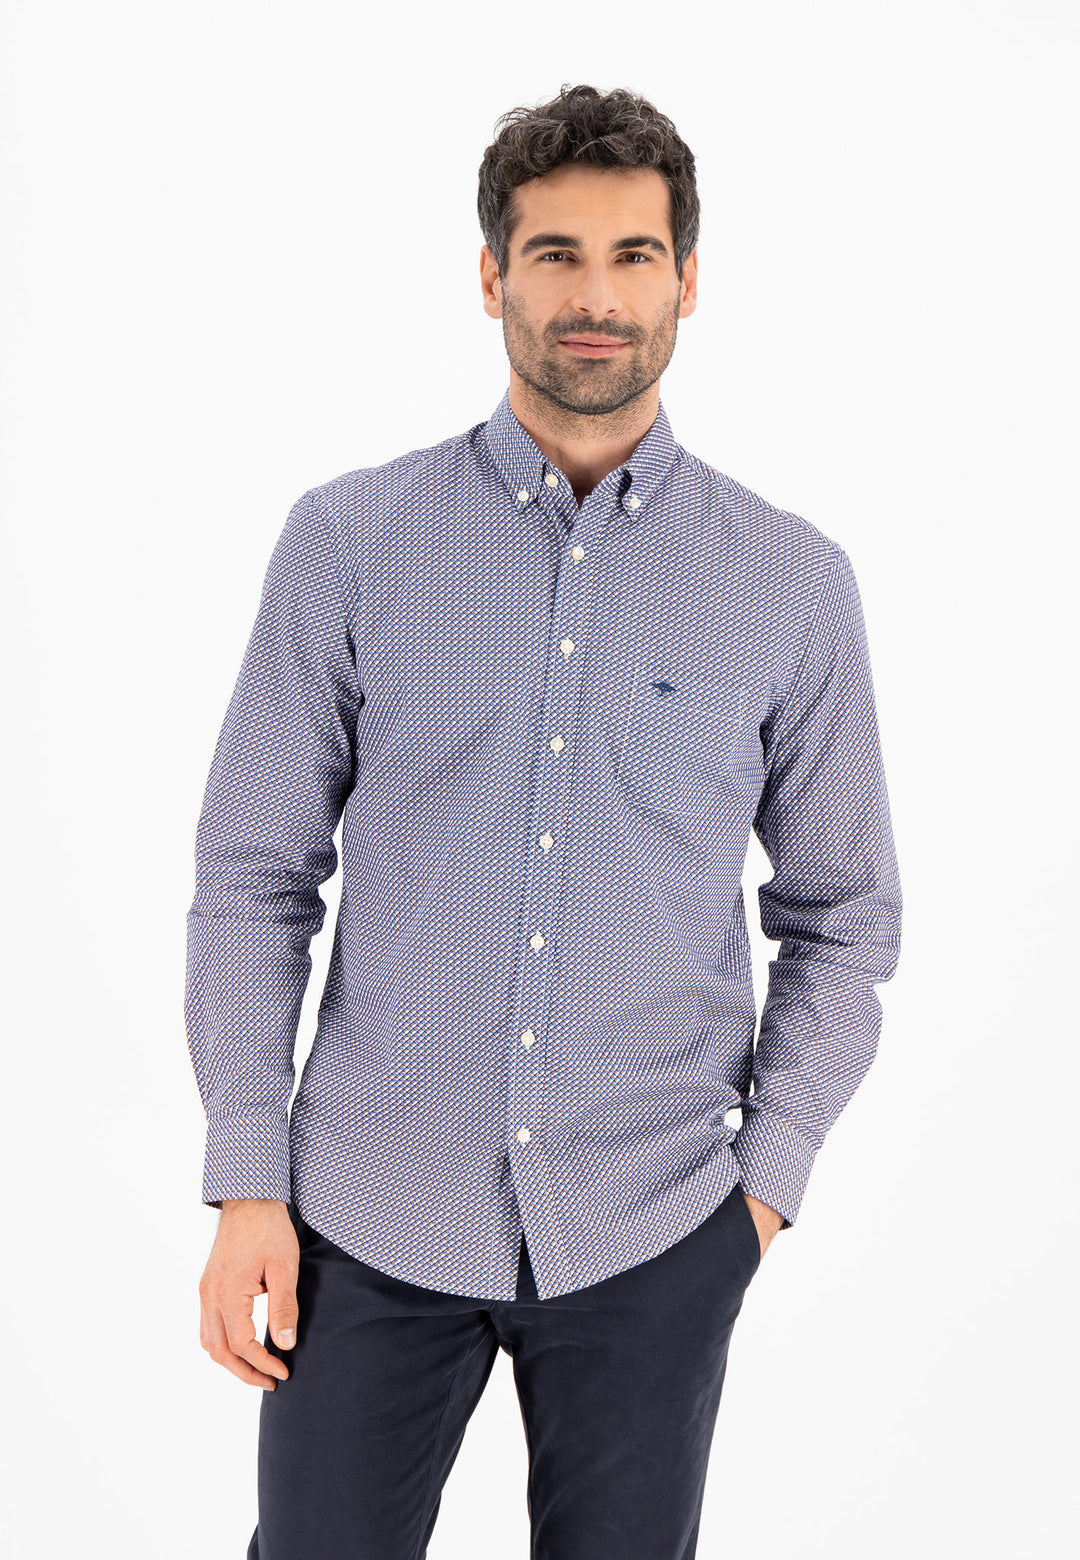 Men's shirts | Fynch-Hatton official online shop – FYNCH-HATTON |  Offizieller Online Shop